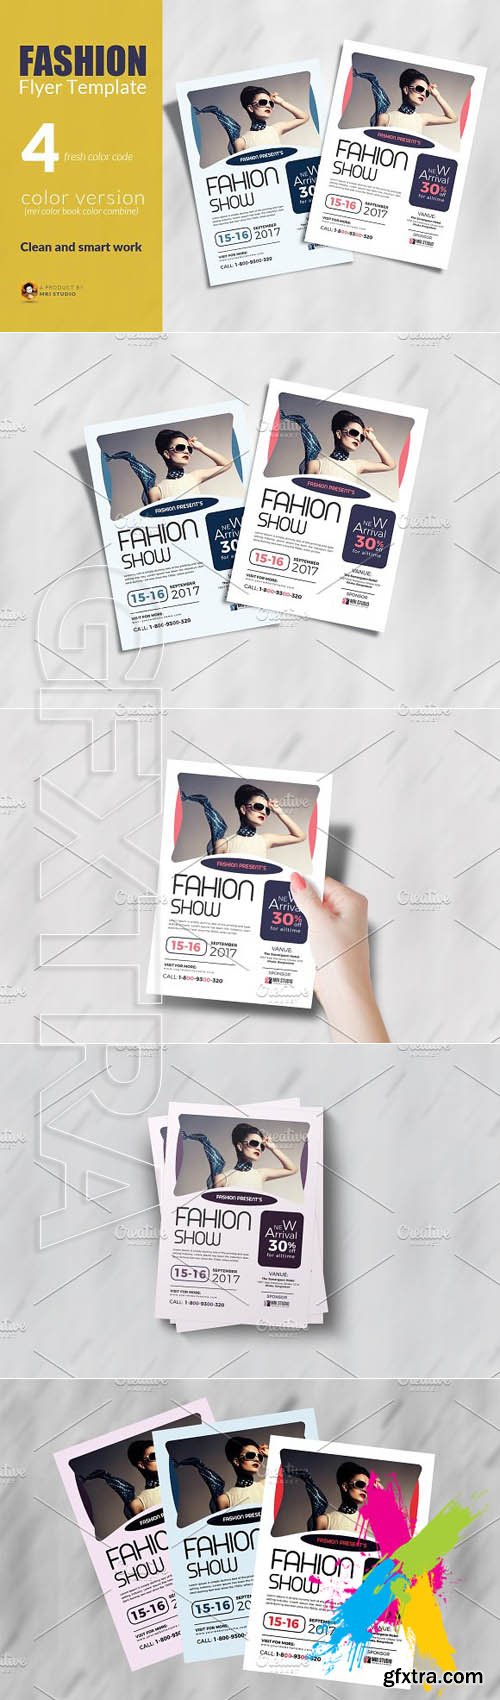 CreativeMarket - Fashion Flyer Template 1862519